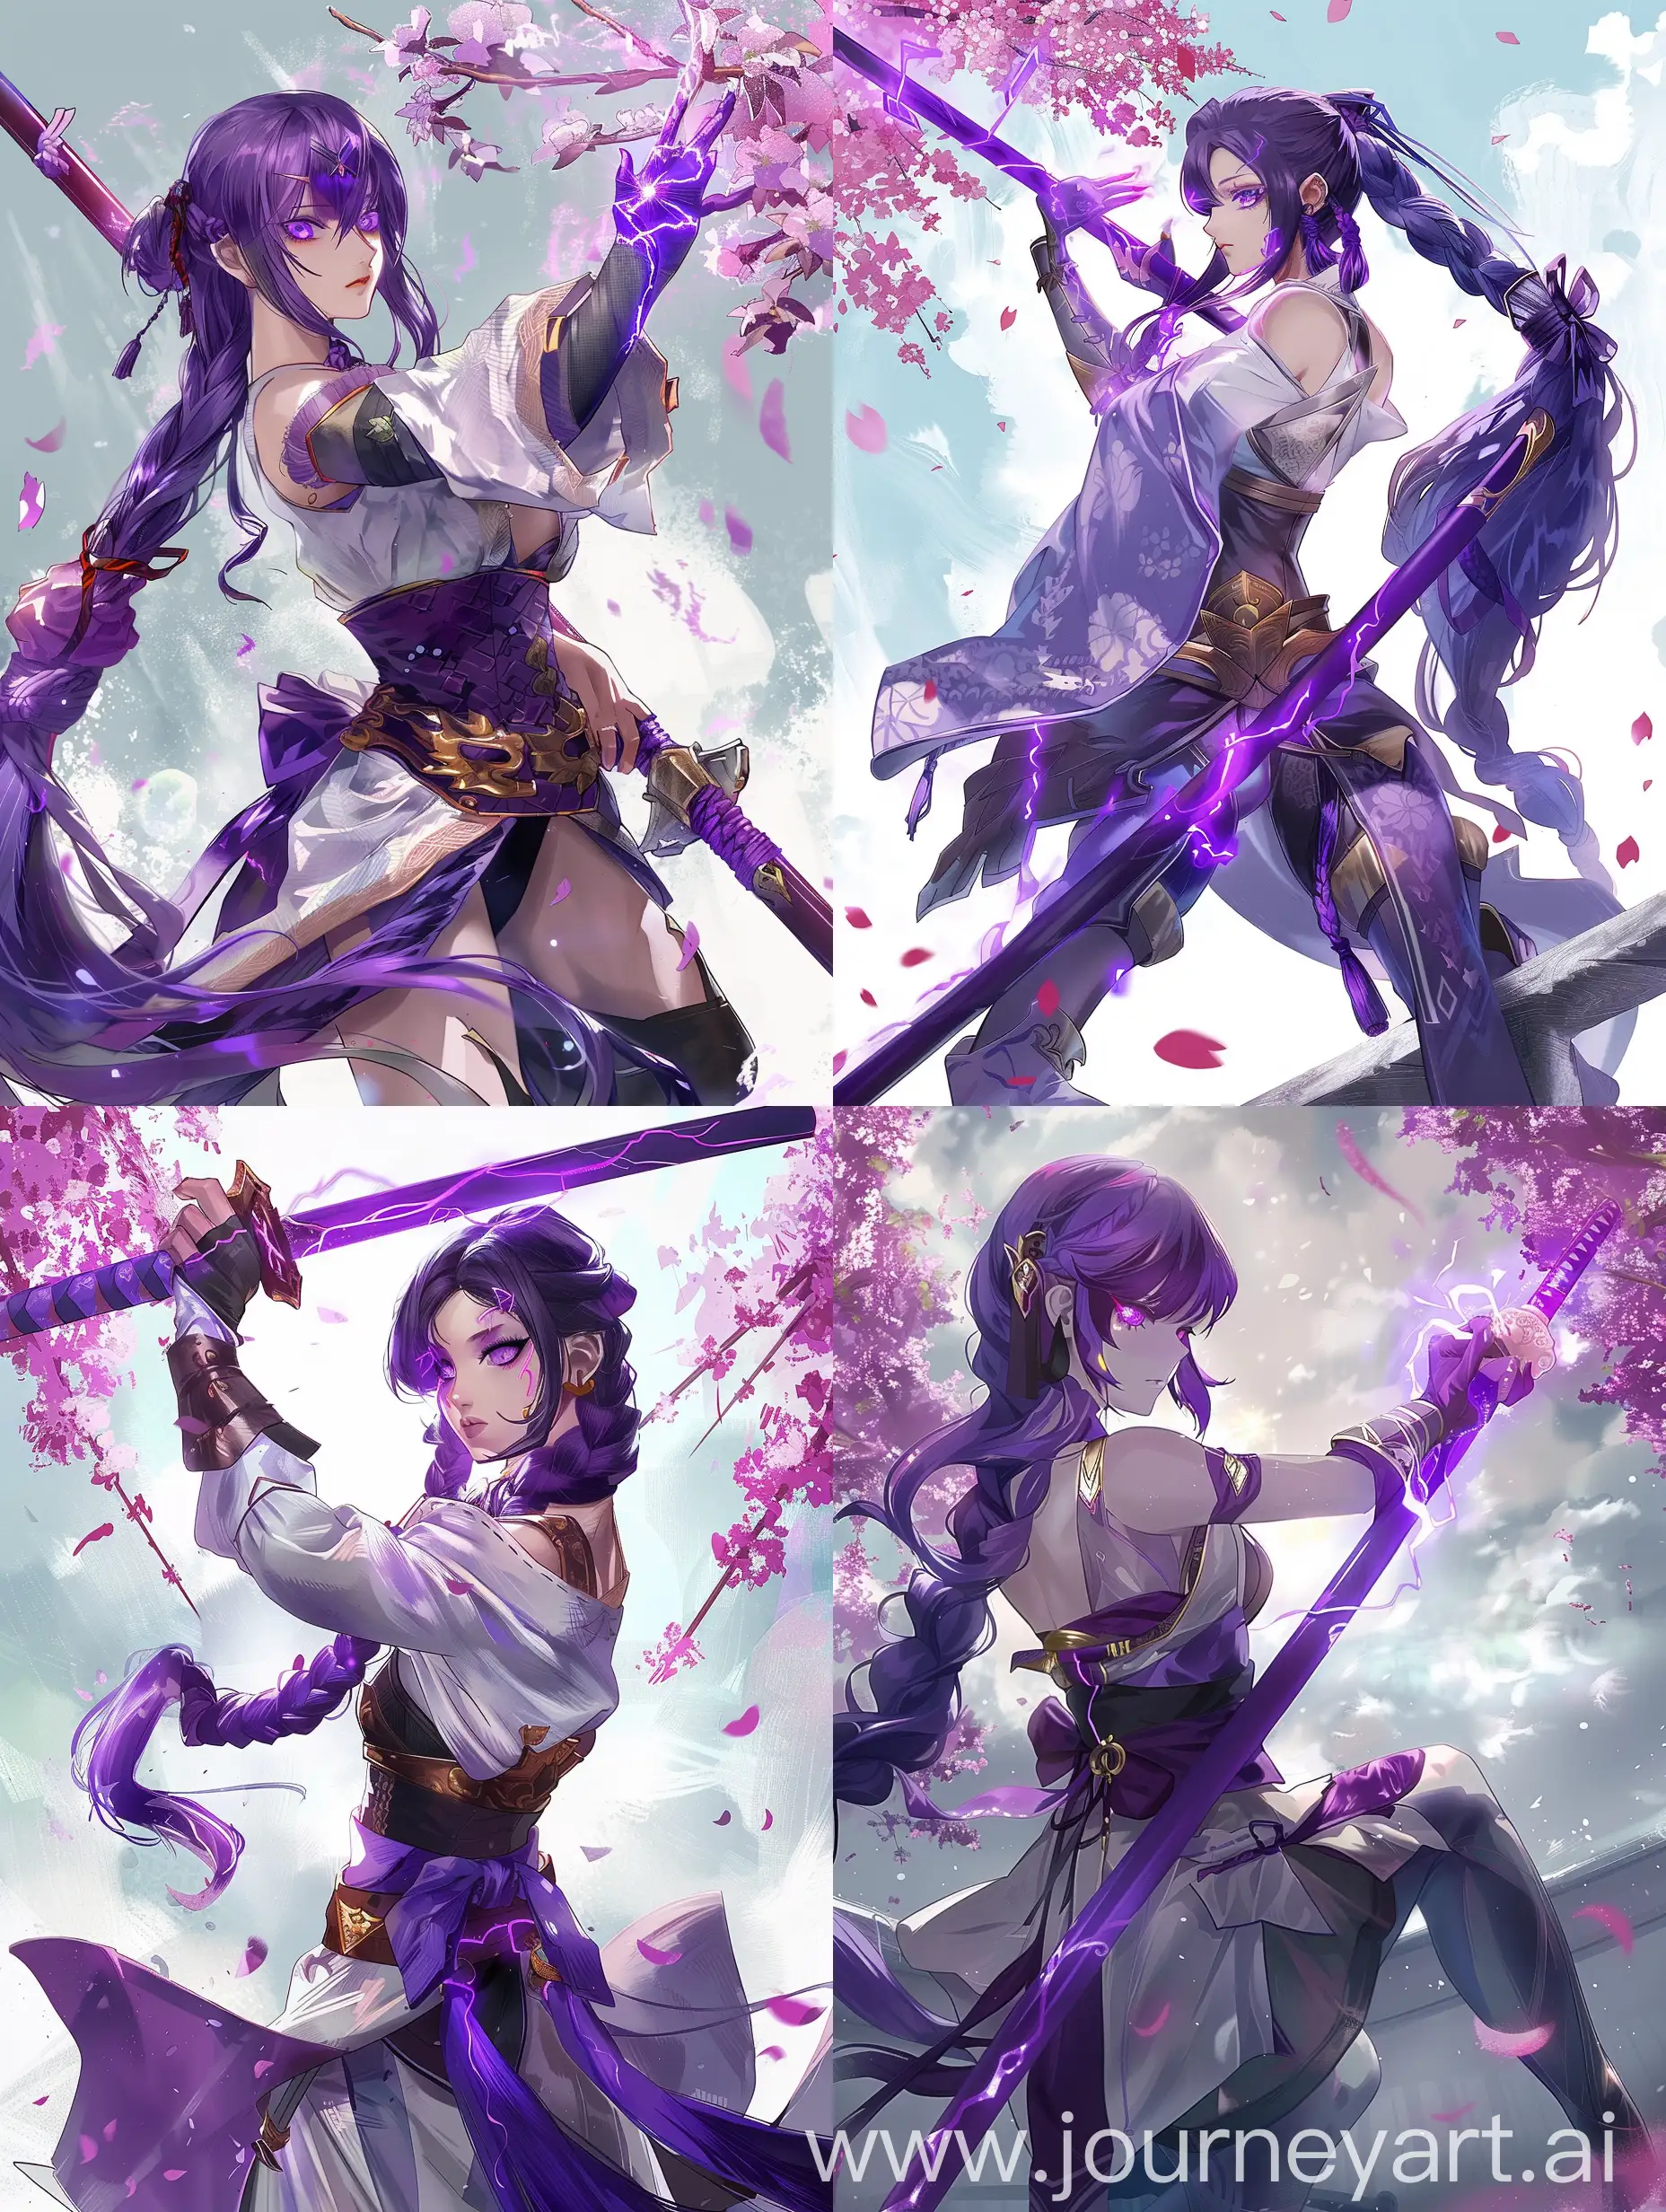 Girl with purple electric naginata, purple eyes, long braid of purple color, fighting stance

--sref https://sun9-64.userapi.com/impg/ed5Rmi6qrYdFhHkTKh4CgSPO3o0O6ct3ofgTiw/rxToLQCKPzE.jpg?size=1036x1577&quality=96&sign=692da573605e6f6c4d2eb03f5384956d&type=album